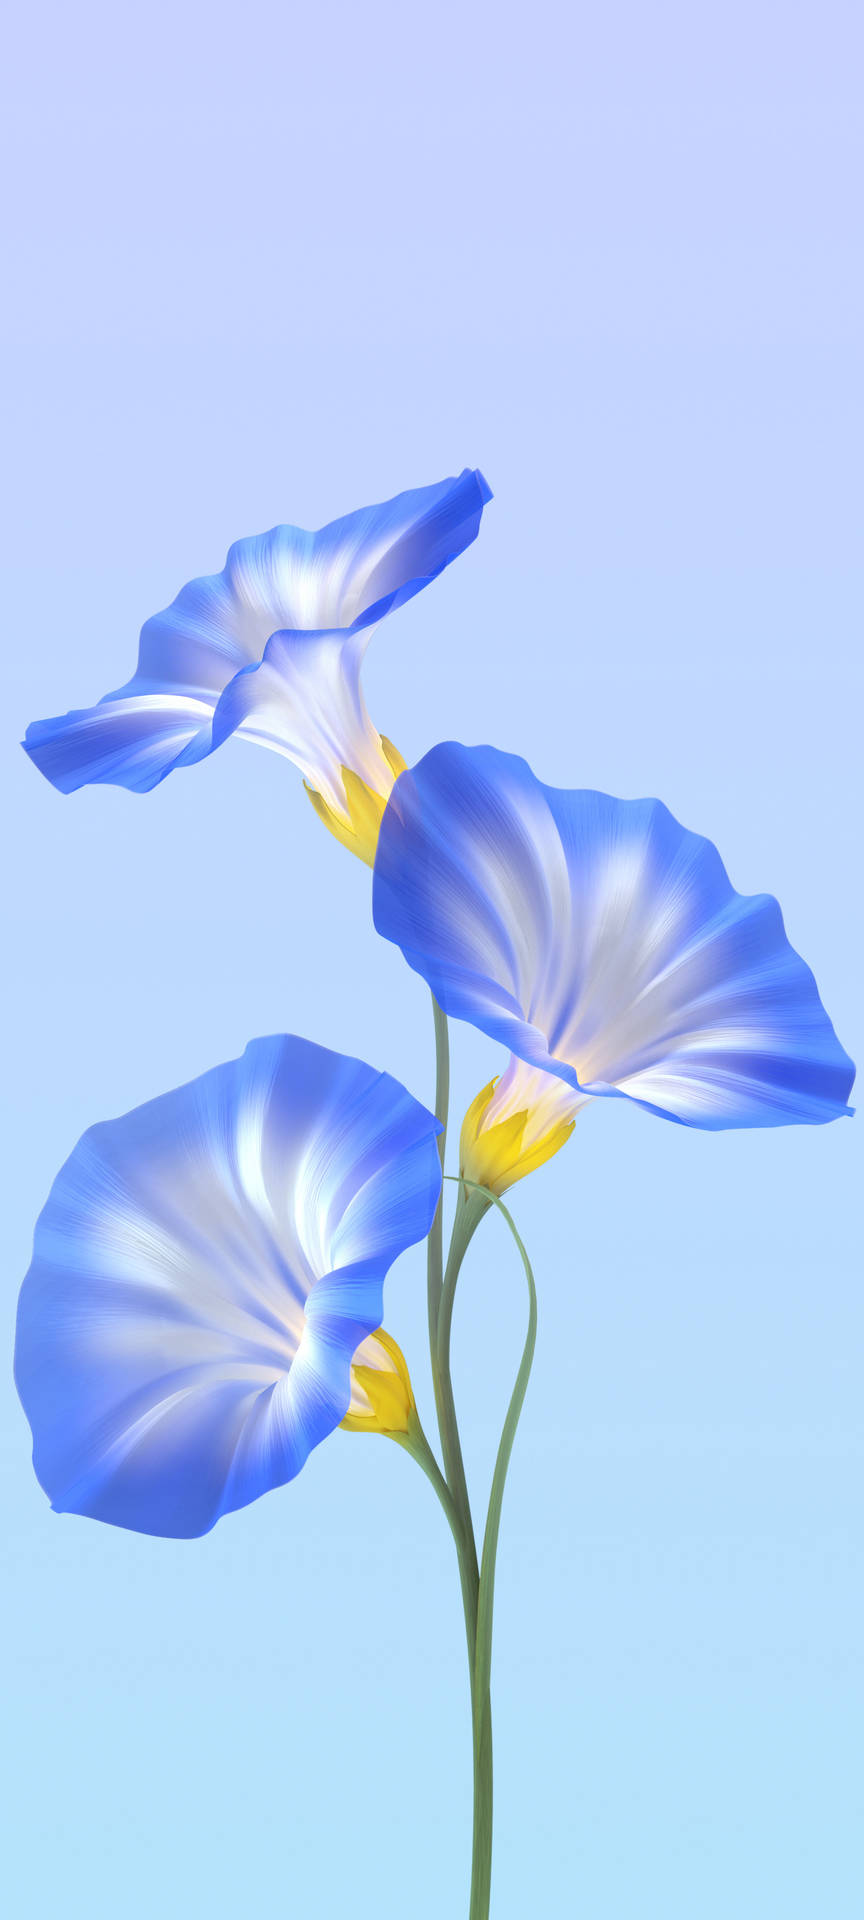 Vivo Y11 Blue Flowers Wallpaper